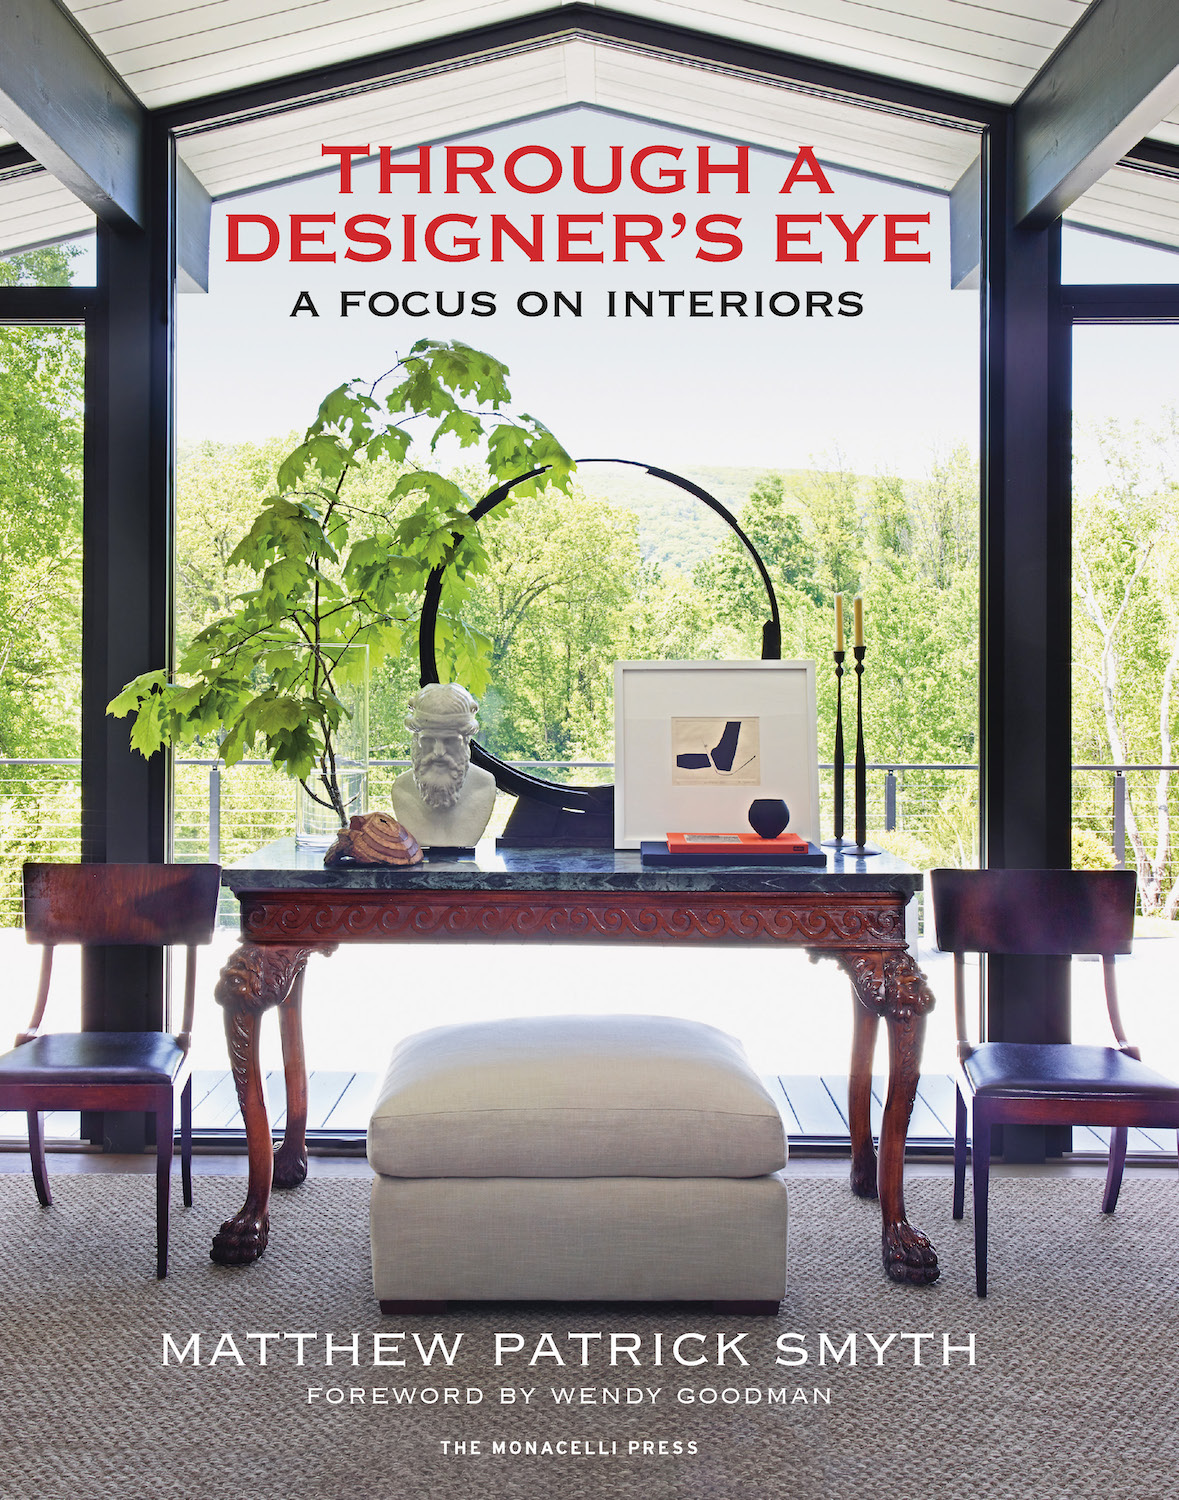 Through a Designer's Eye by Matthew Patrick Smyth